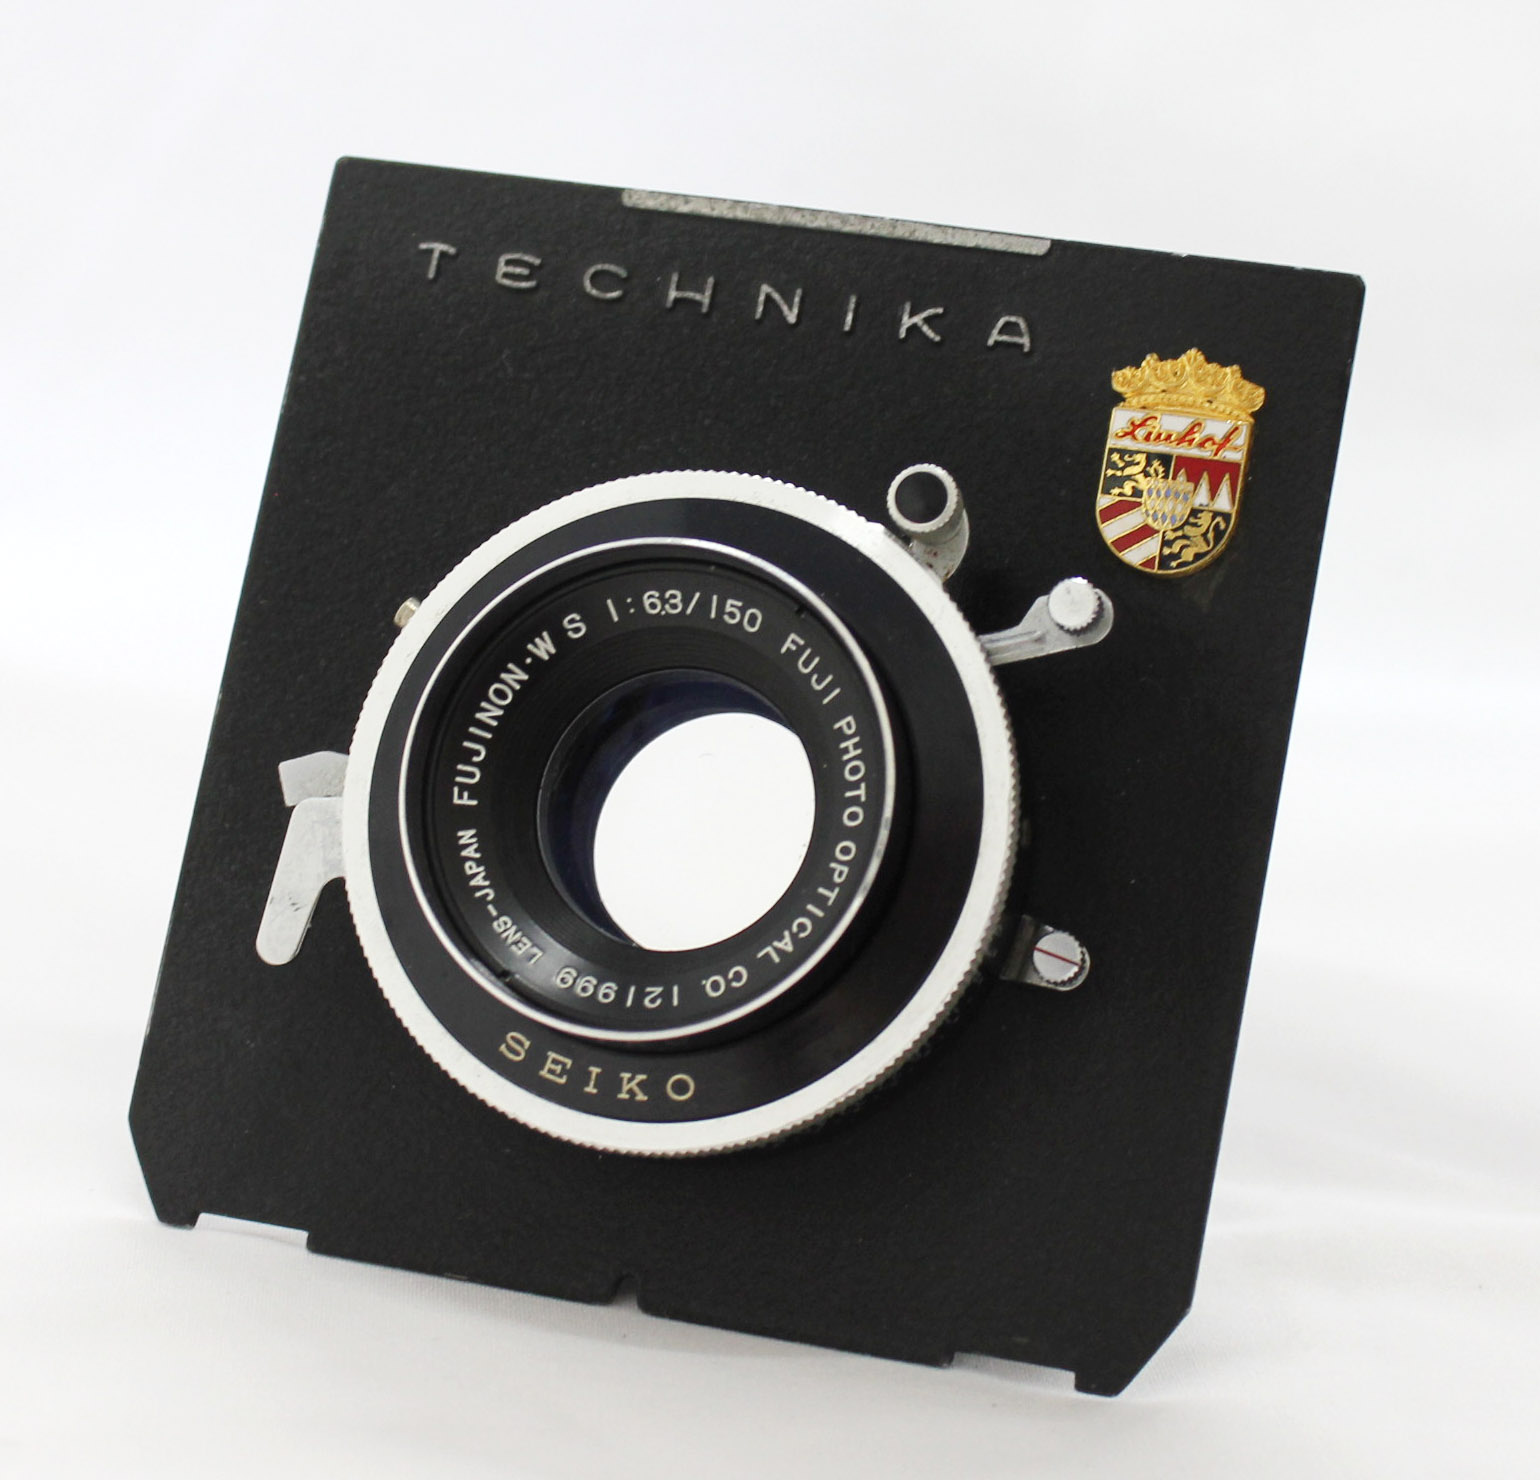 Japan Used Camera Shop | [Exc+++++] Fuji Fujinon W S 150mm F/6.3 4x5 Large Format Lens w/ Seiko Shutter Linhof Board from Japan